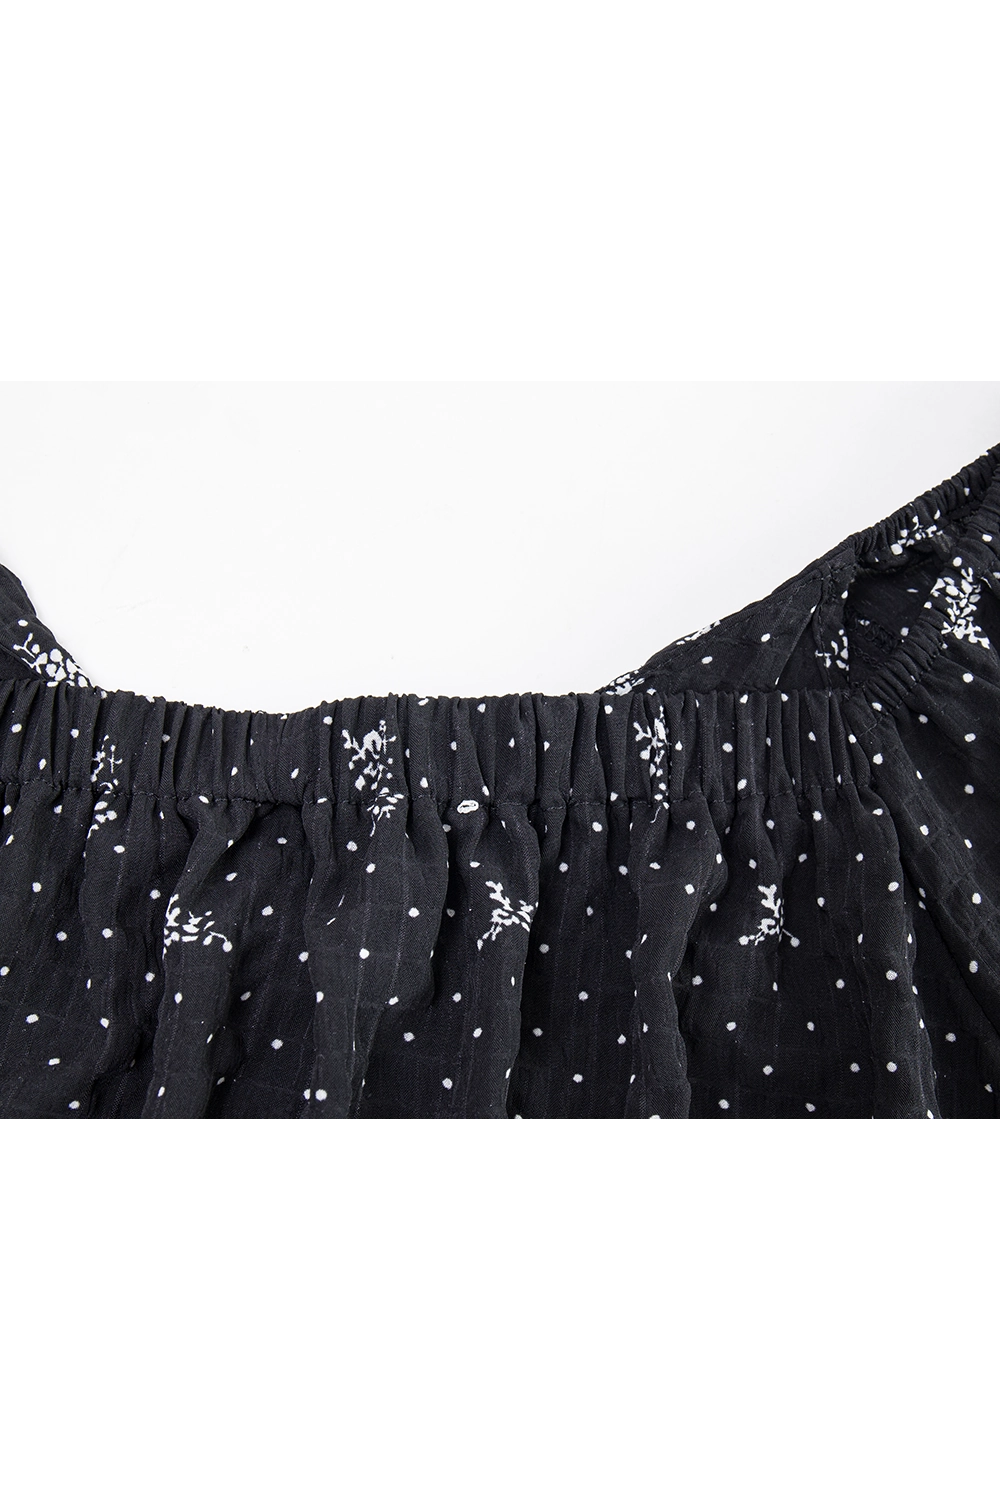 Women's Black Floral Print Ruffle Short Sleeve Top